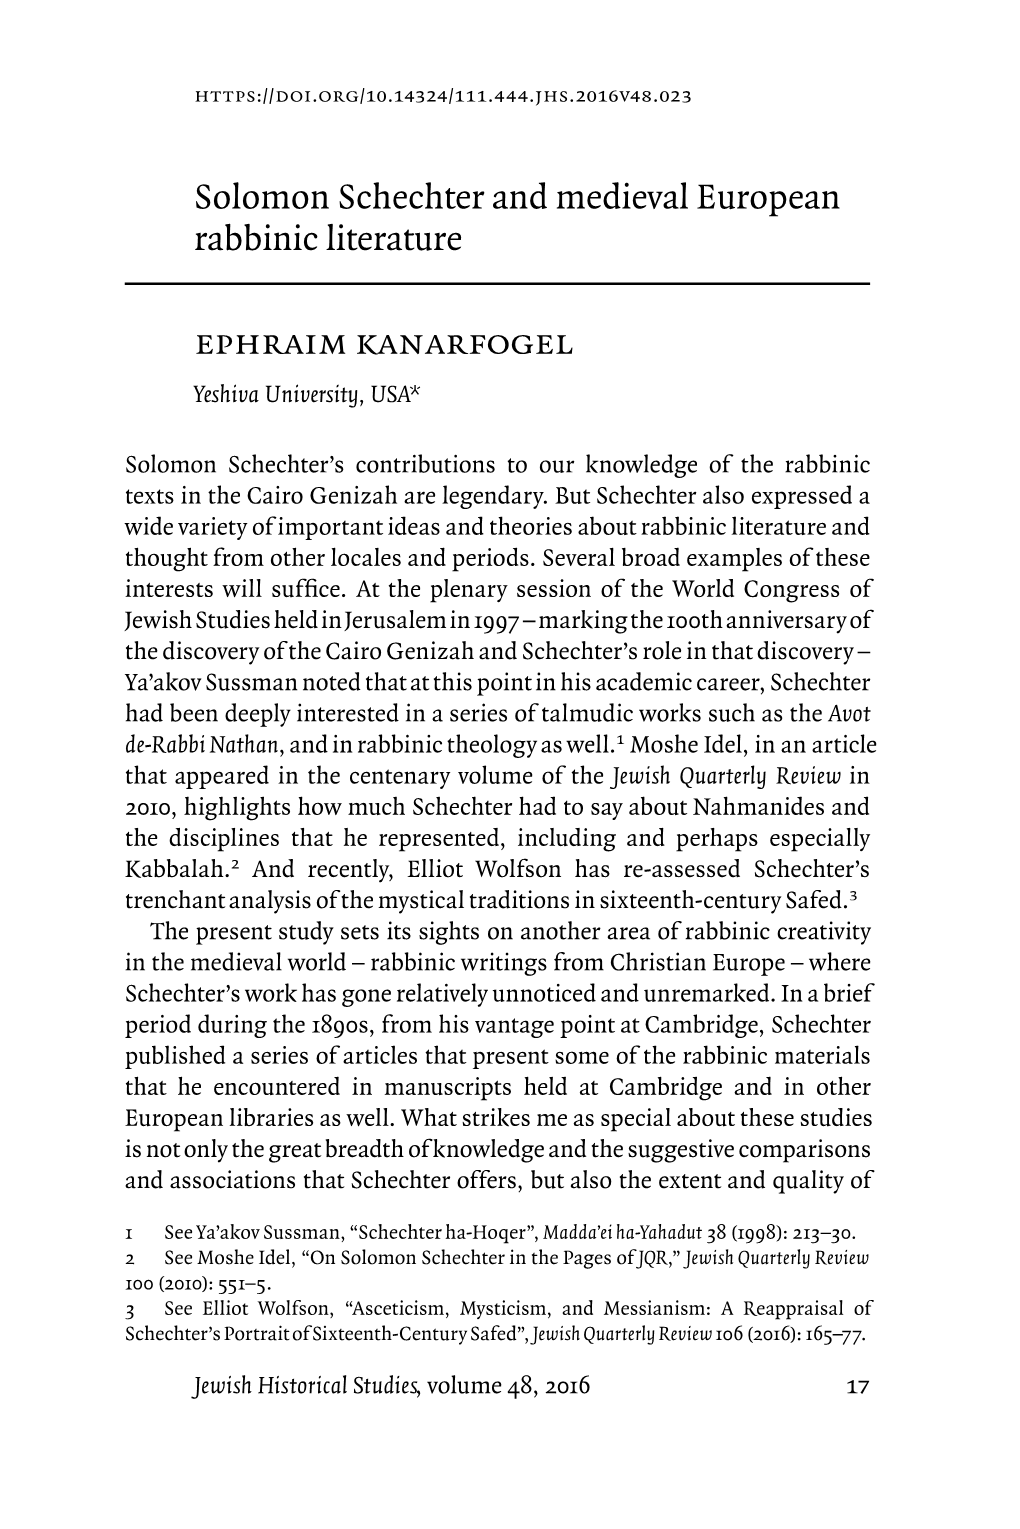 Solomon Schechter and Medieval European Rabbinic Literature